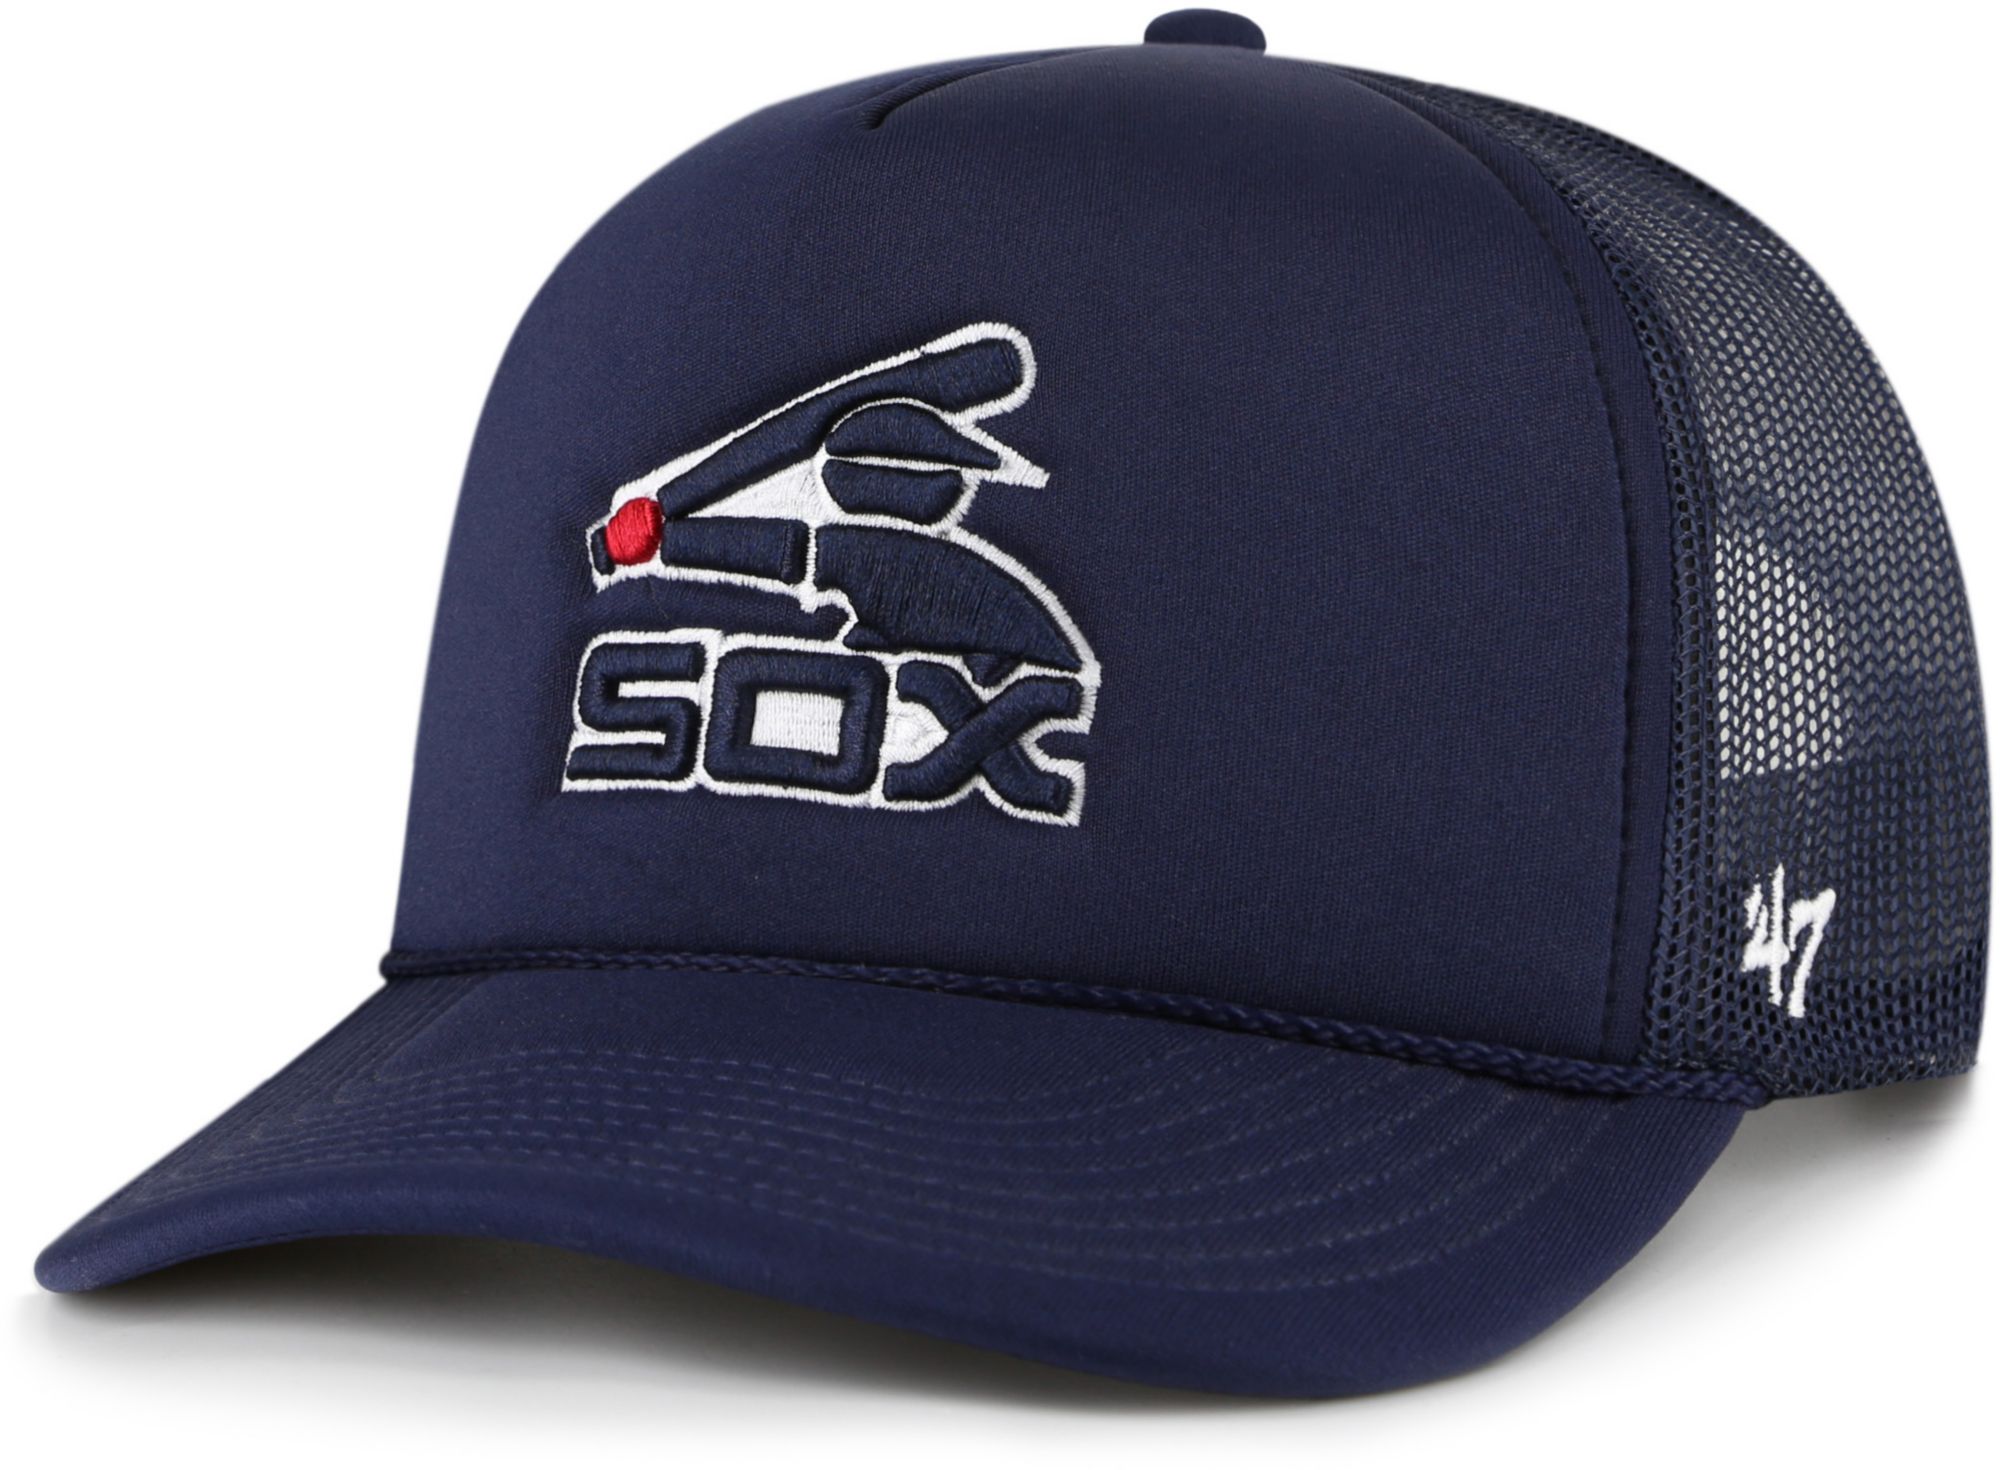 White Sox Summer Ballpark Adjustable Light Blue Hat